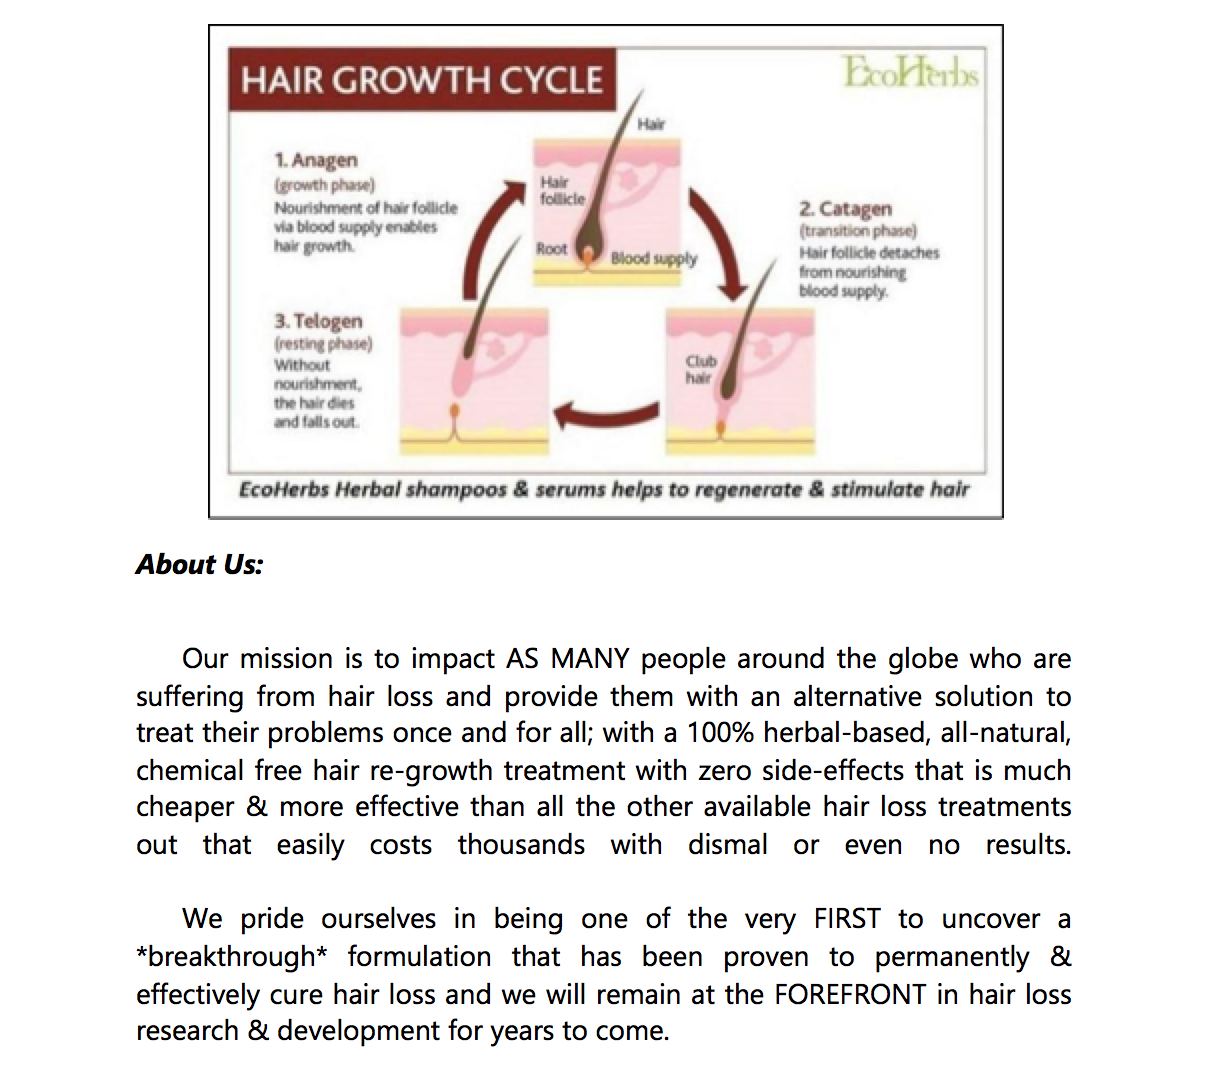 EcoHerbs Ginseng Extra Strength Serum - Helps Hair Regrowth, Hair Loss, Hair Thinning for Women & Men (100ml)